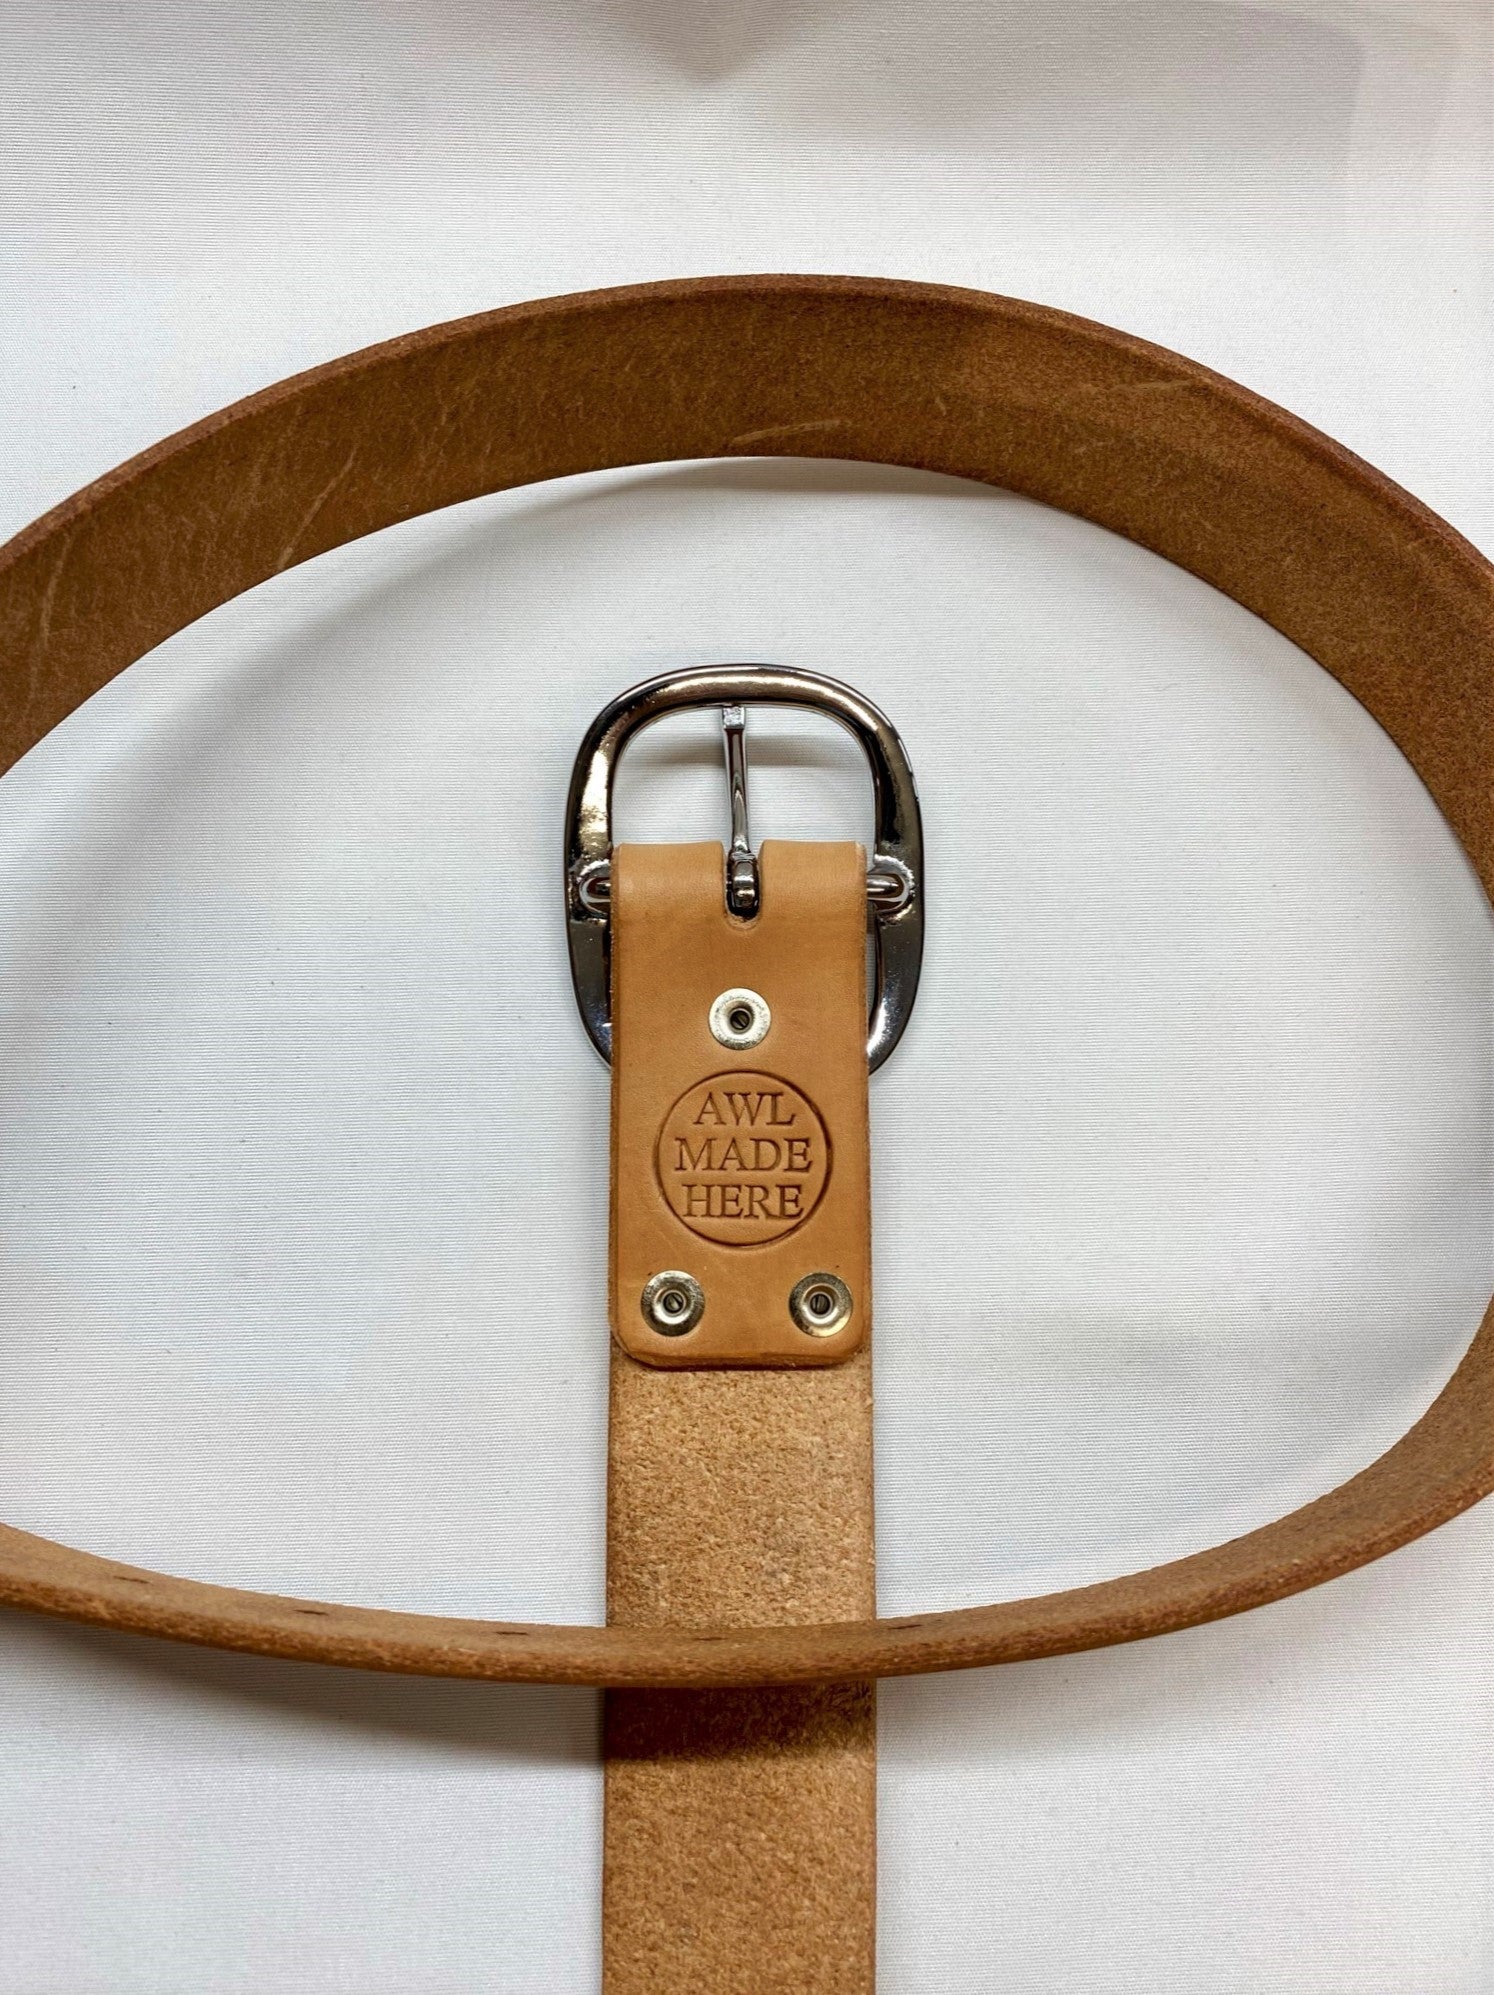 Leather Belt, tooled center